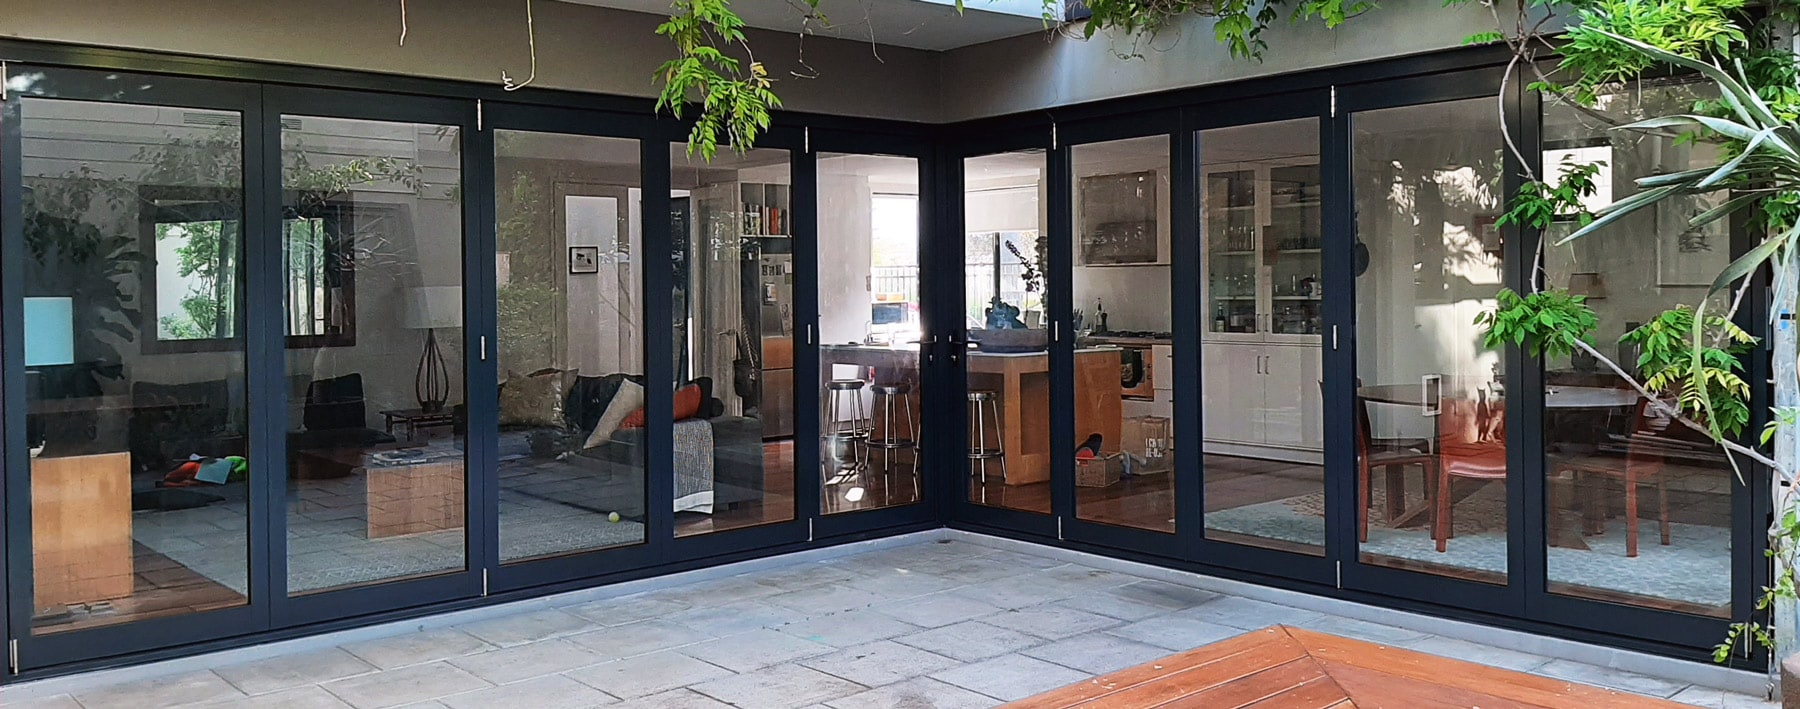 Bifold Doors Perth Wa Exterior, Commercial Grade Sliding Glass Doors